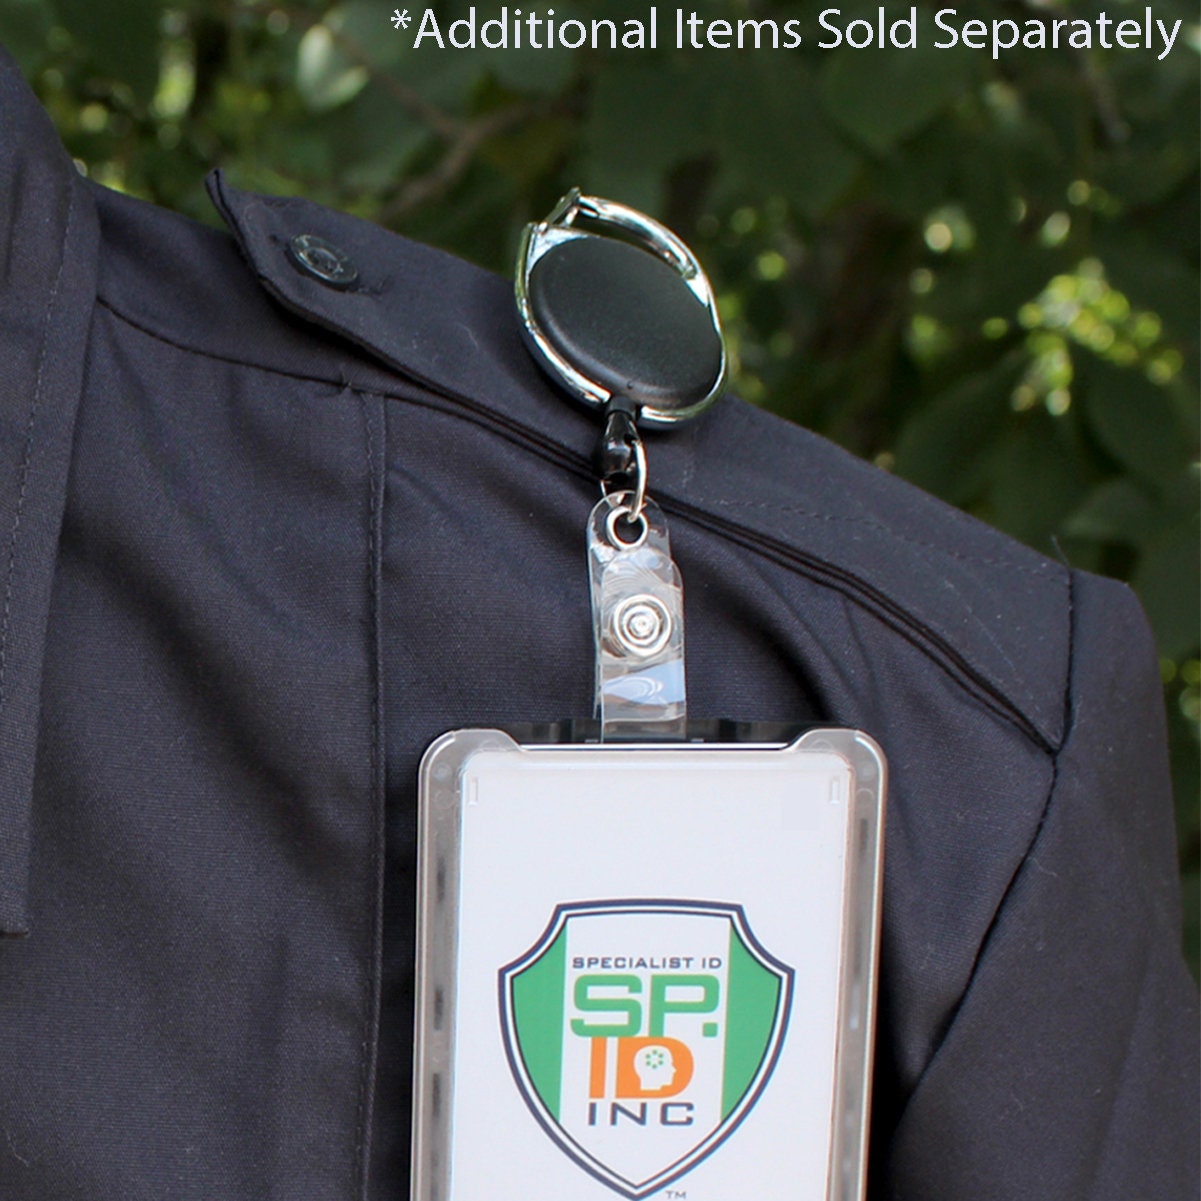 Wholesale CREATCABIN Badge Reel Retractable Frog Badge Holder